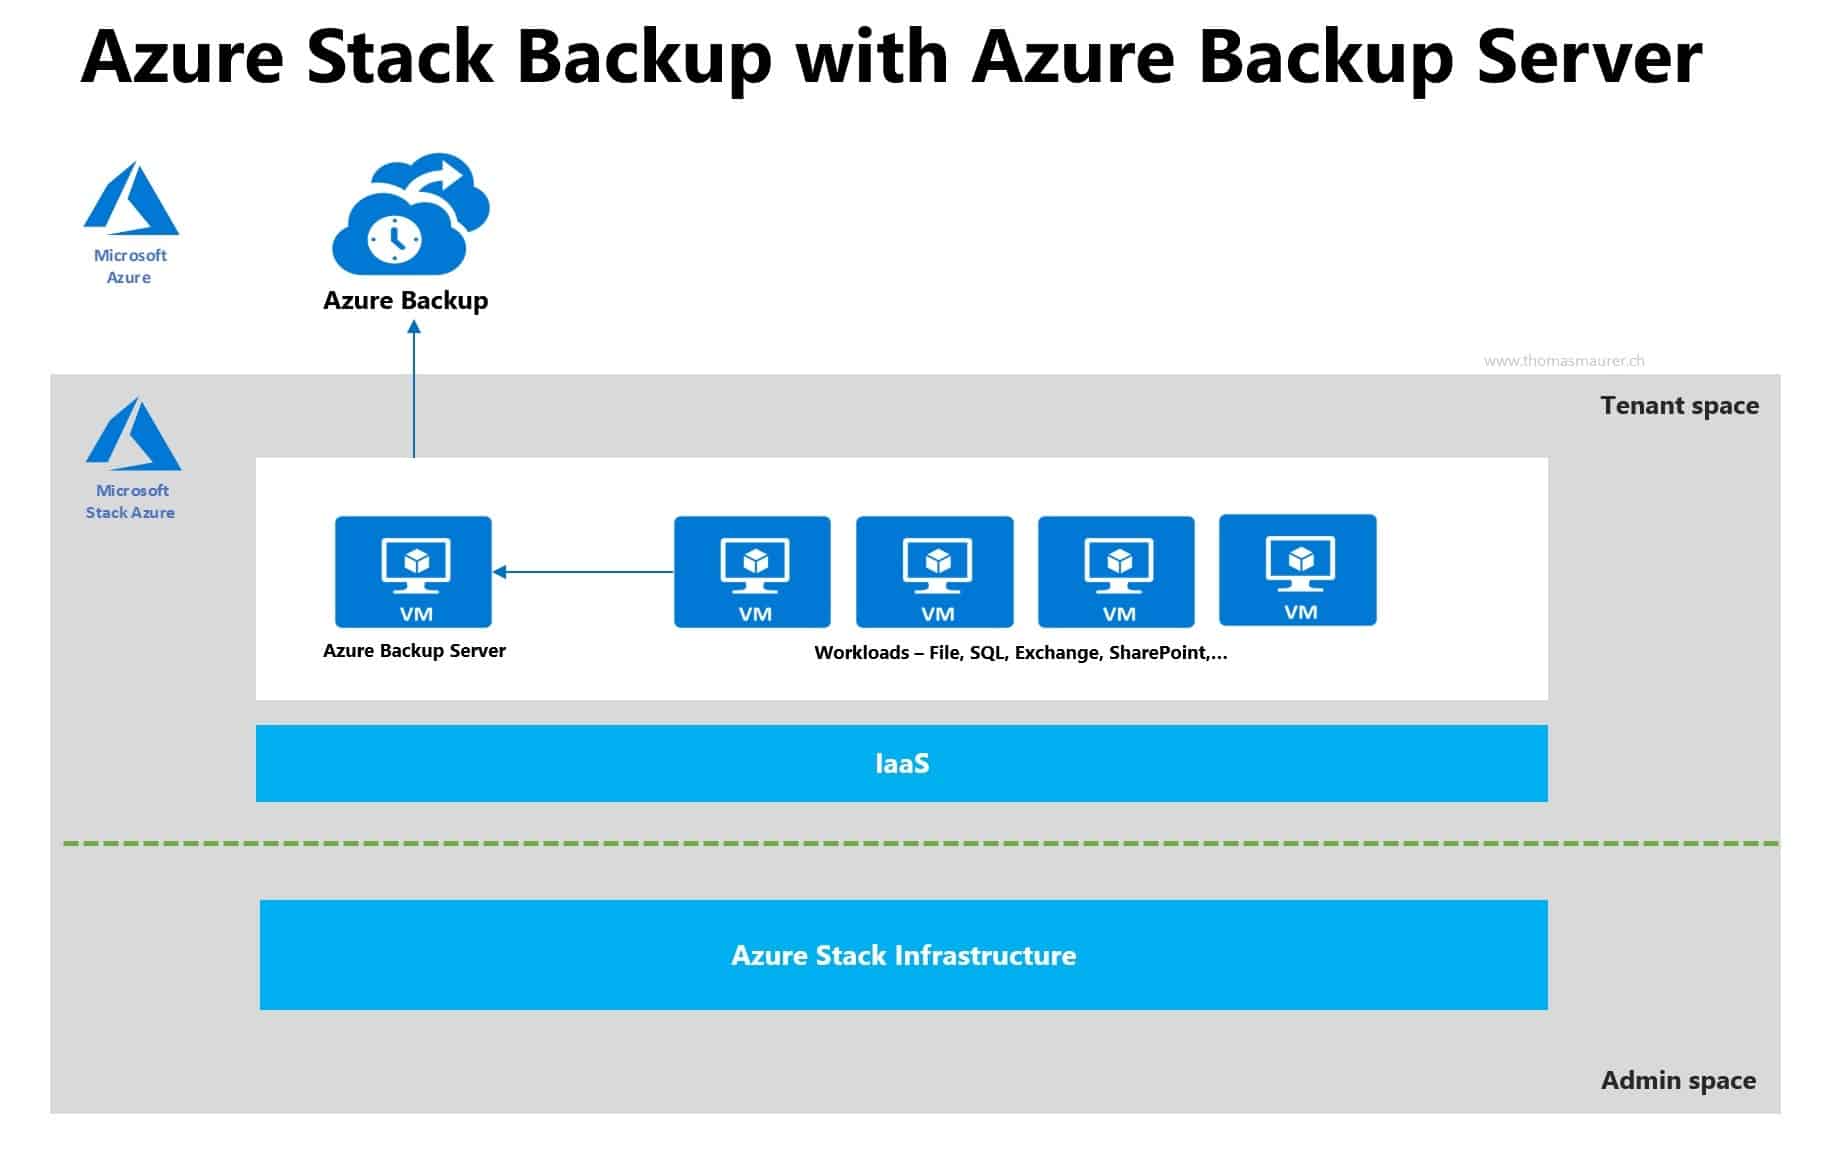 Azure Stack Backup with Azure Backup Server